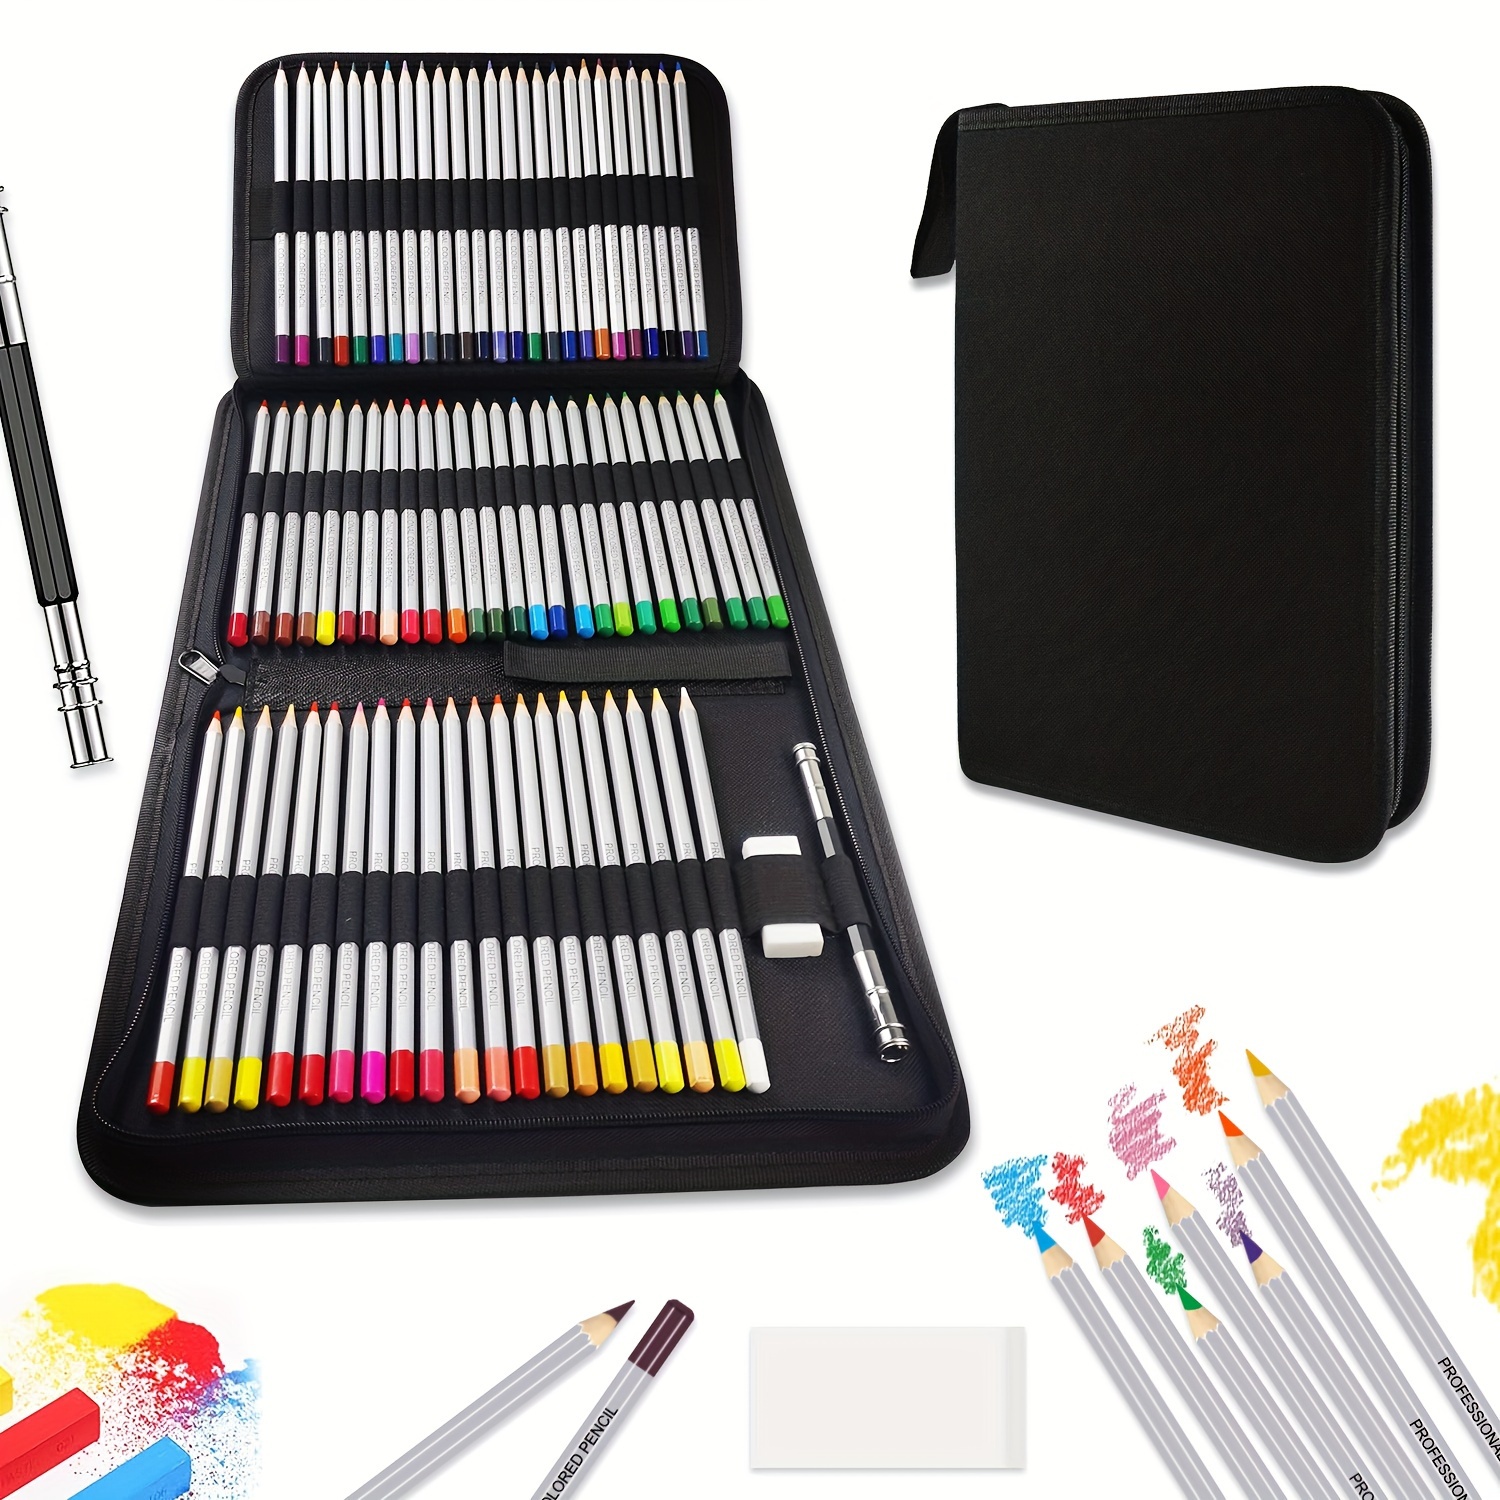 Colored Pencils vs. Watercolor Pencils vs. The Others